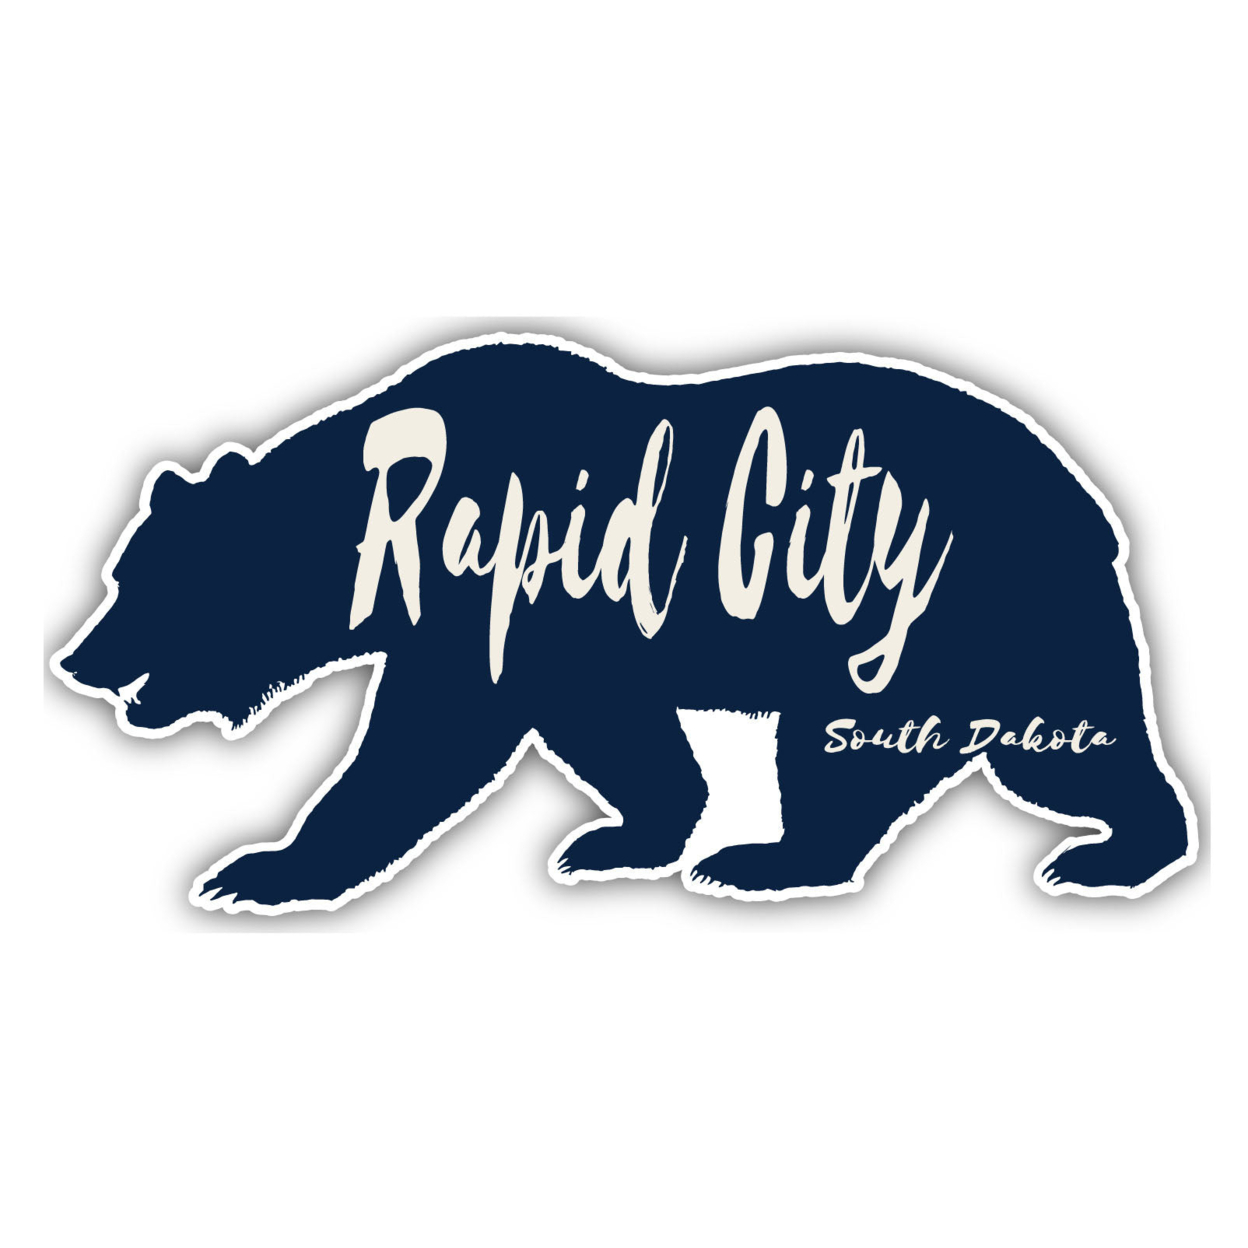 Rapid City South Dakota Souvenir Decorative Stickers (Choose Theme And Size) - Single Unit, 4-Inch, Bear